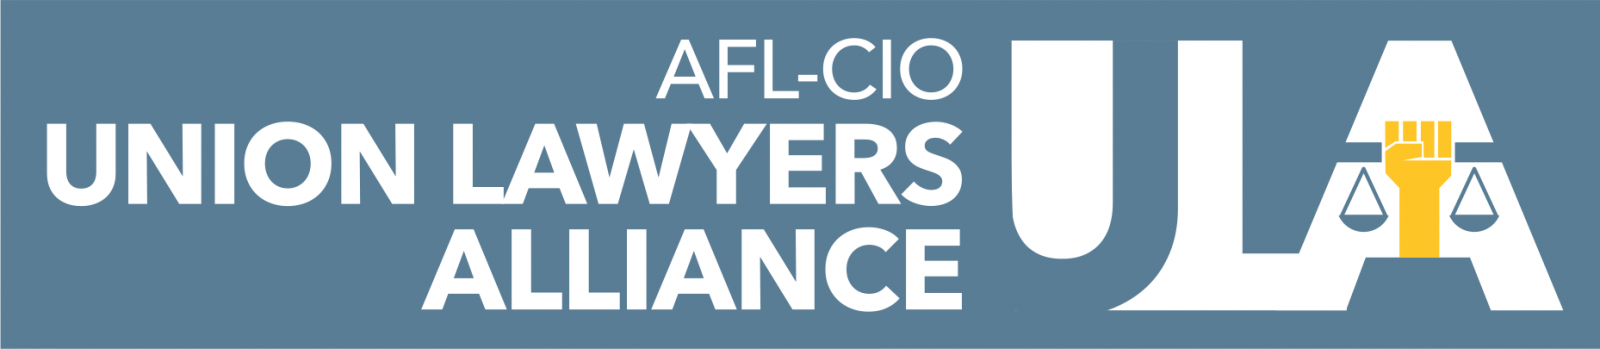 AFL-CIO Union Lawyers Alliance